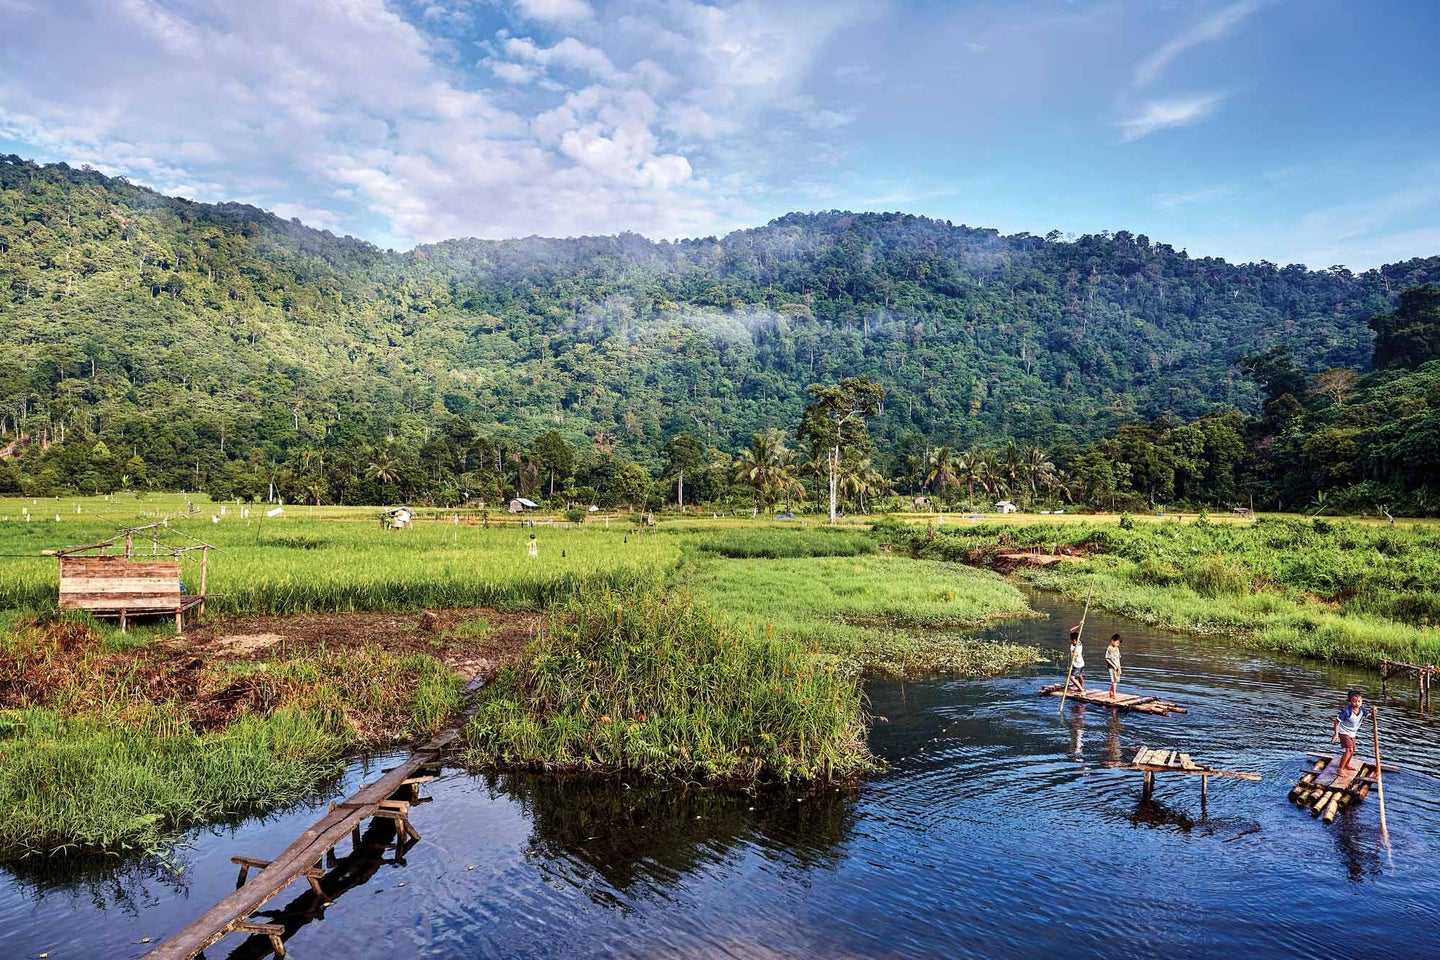 Borneo’s Gunung Palung National Park